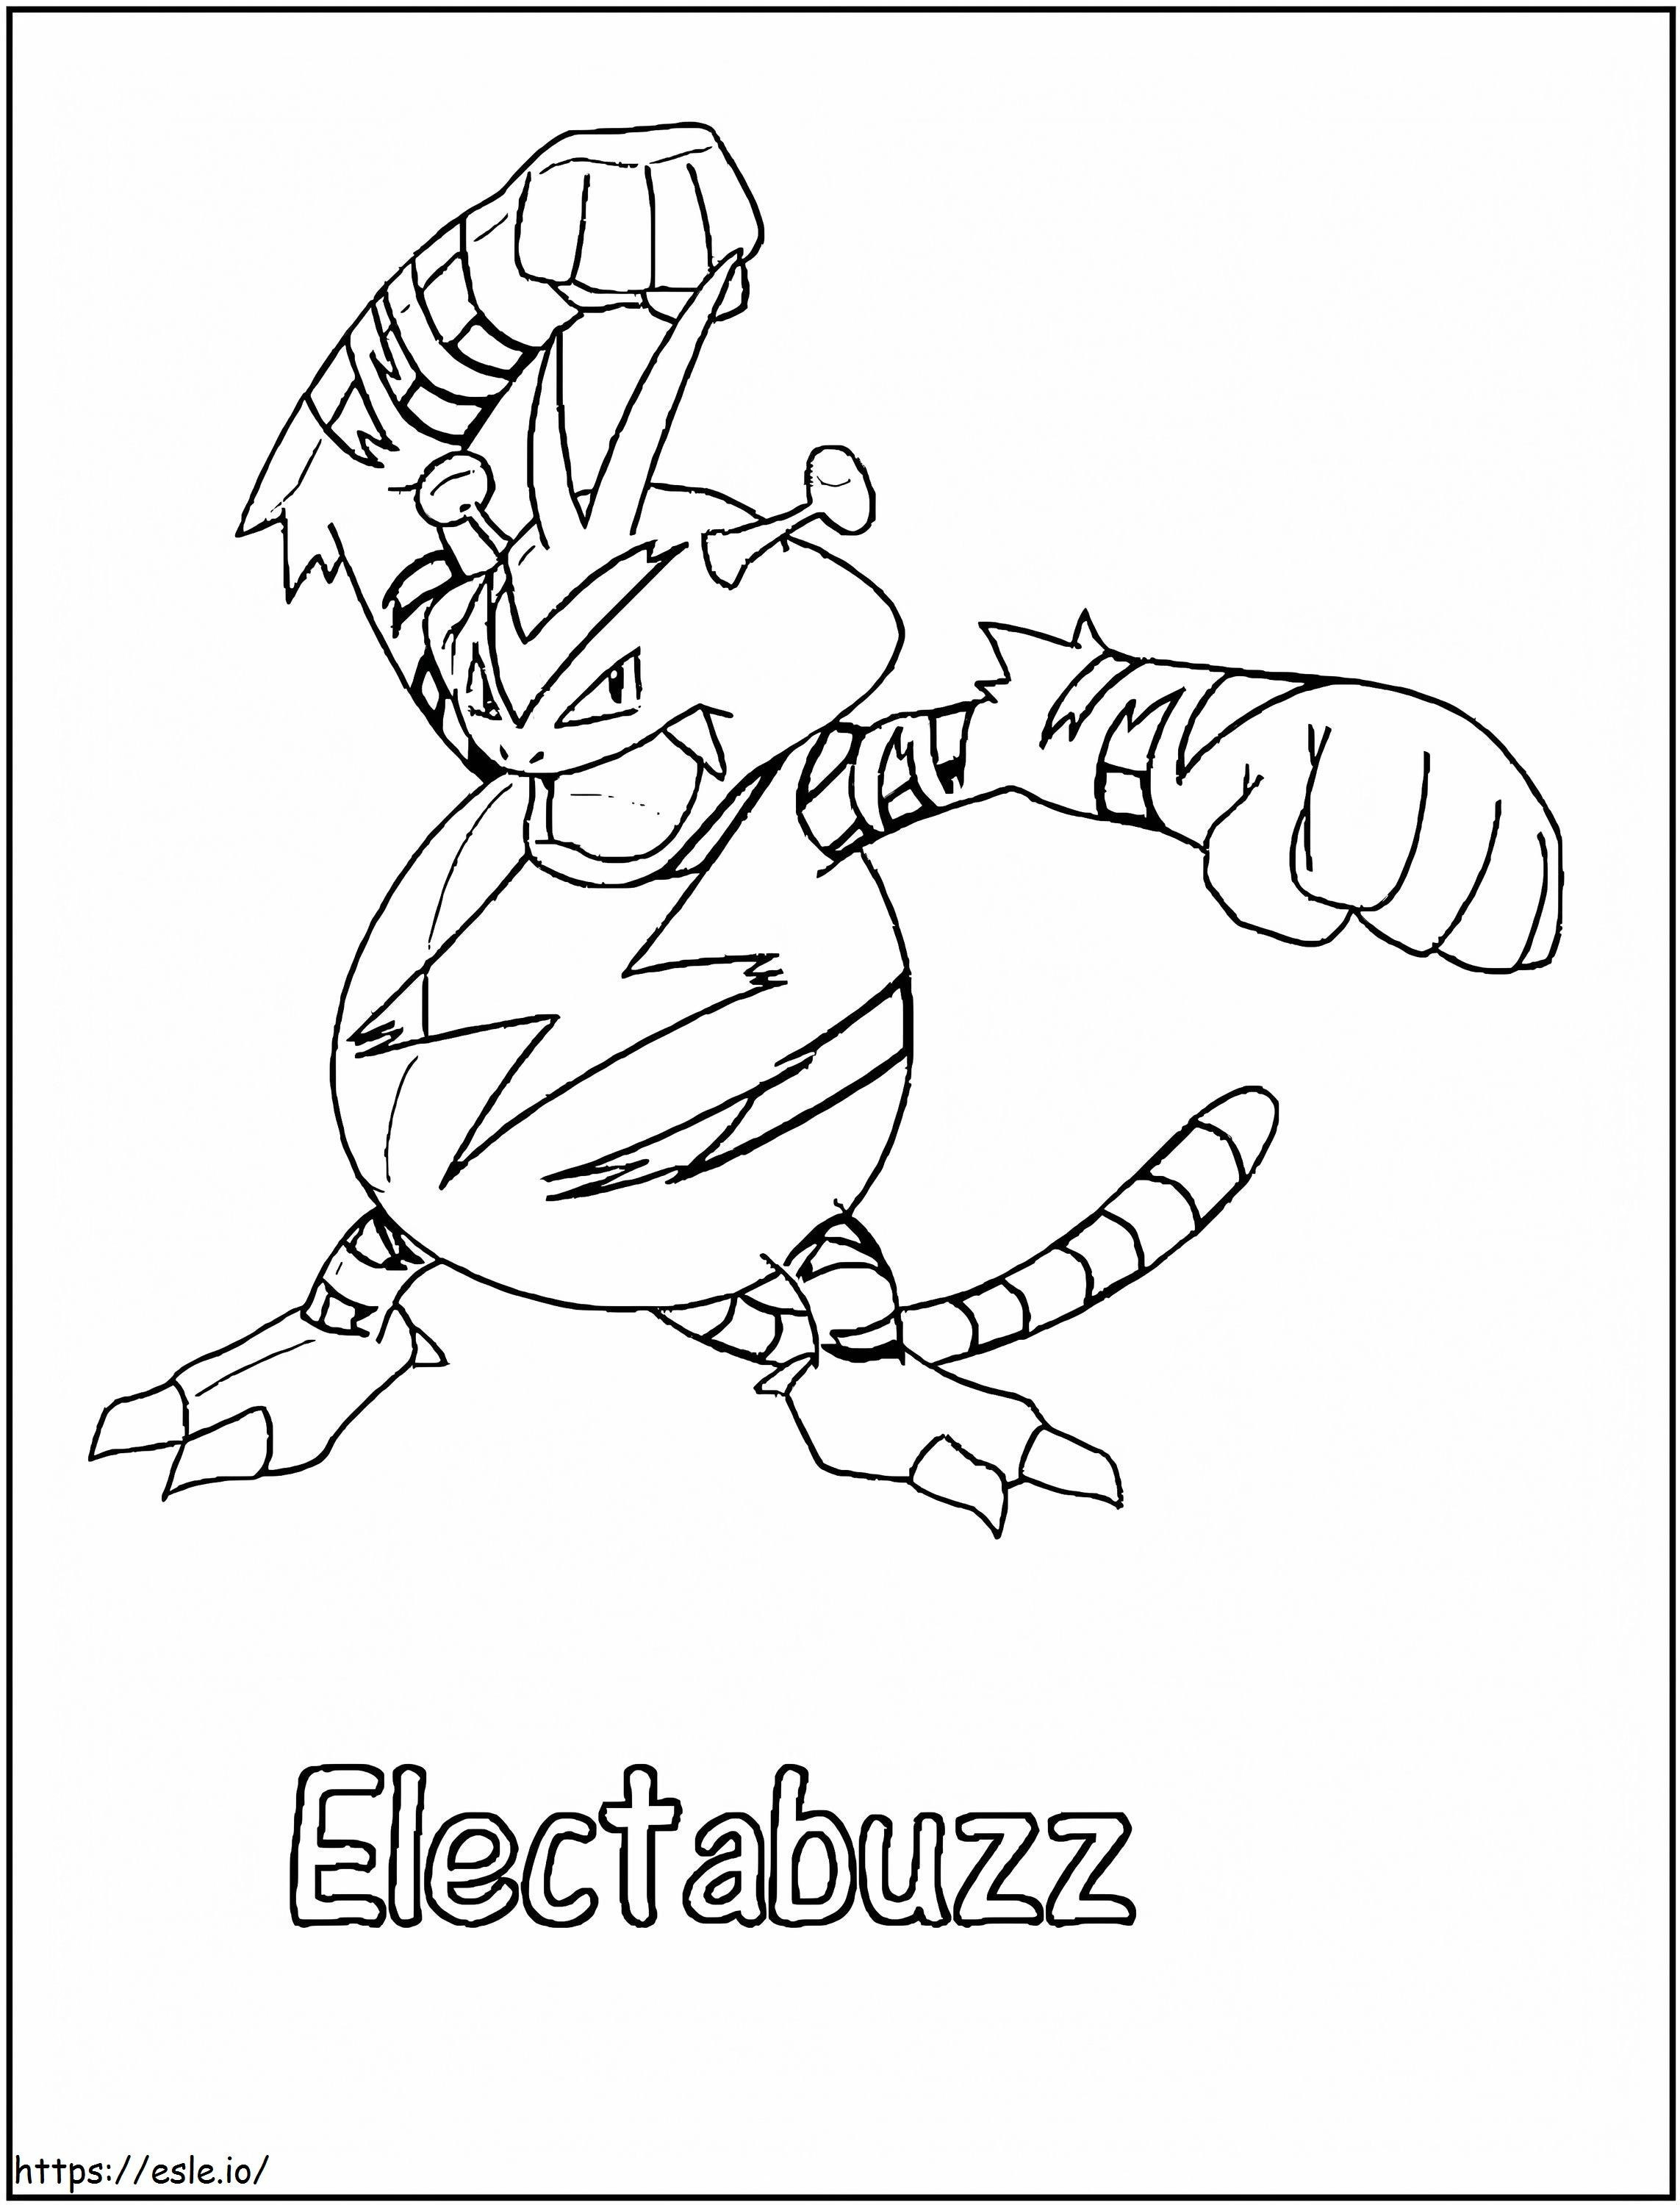 Electabuzz En Pokemon coloring page